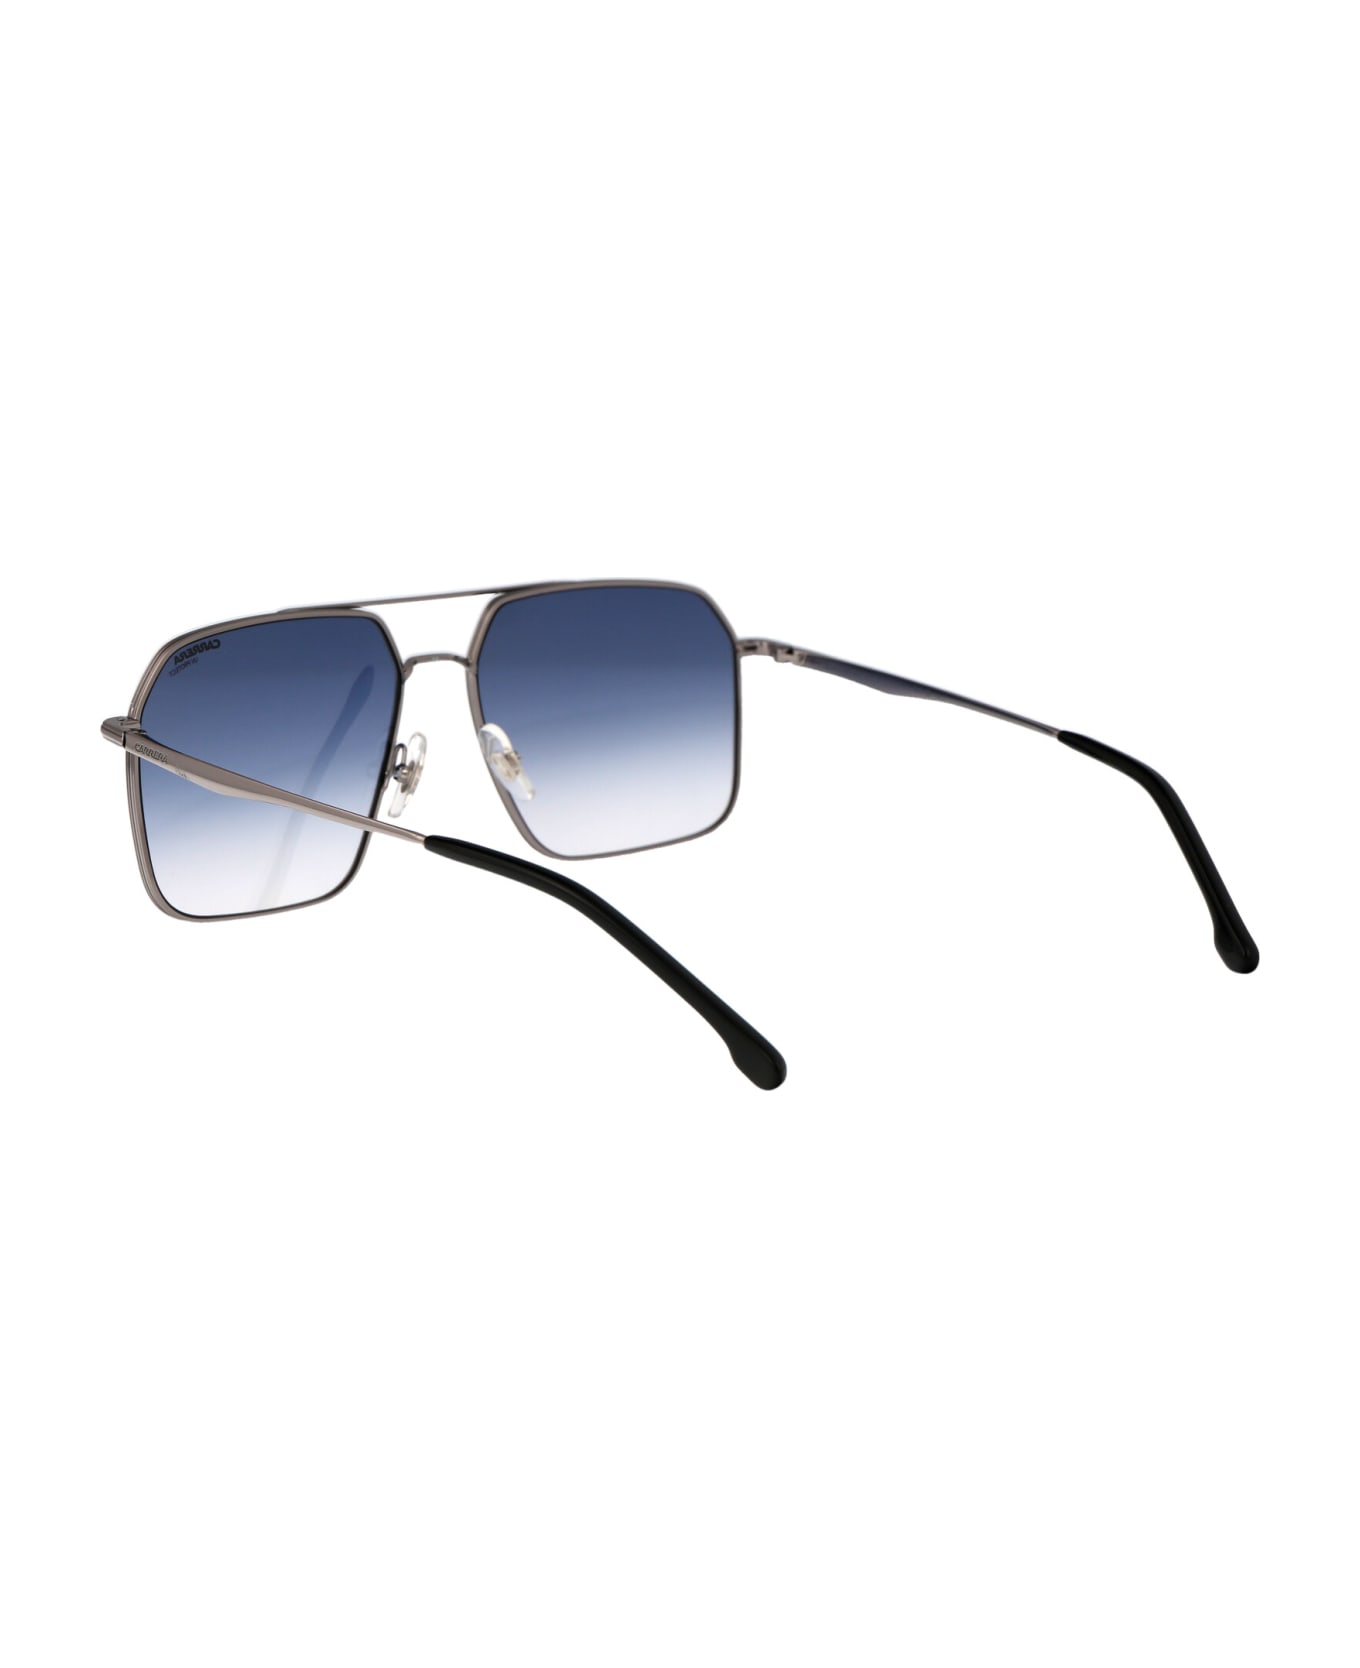 Carrera 333/s Sunglasses - 6LB08 RUTHENIUM